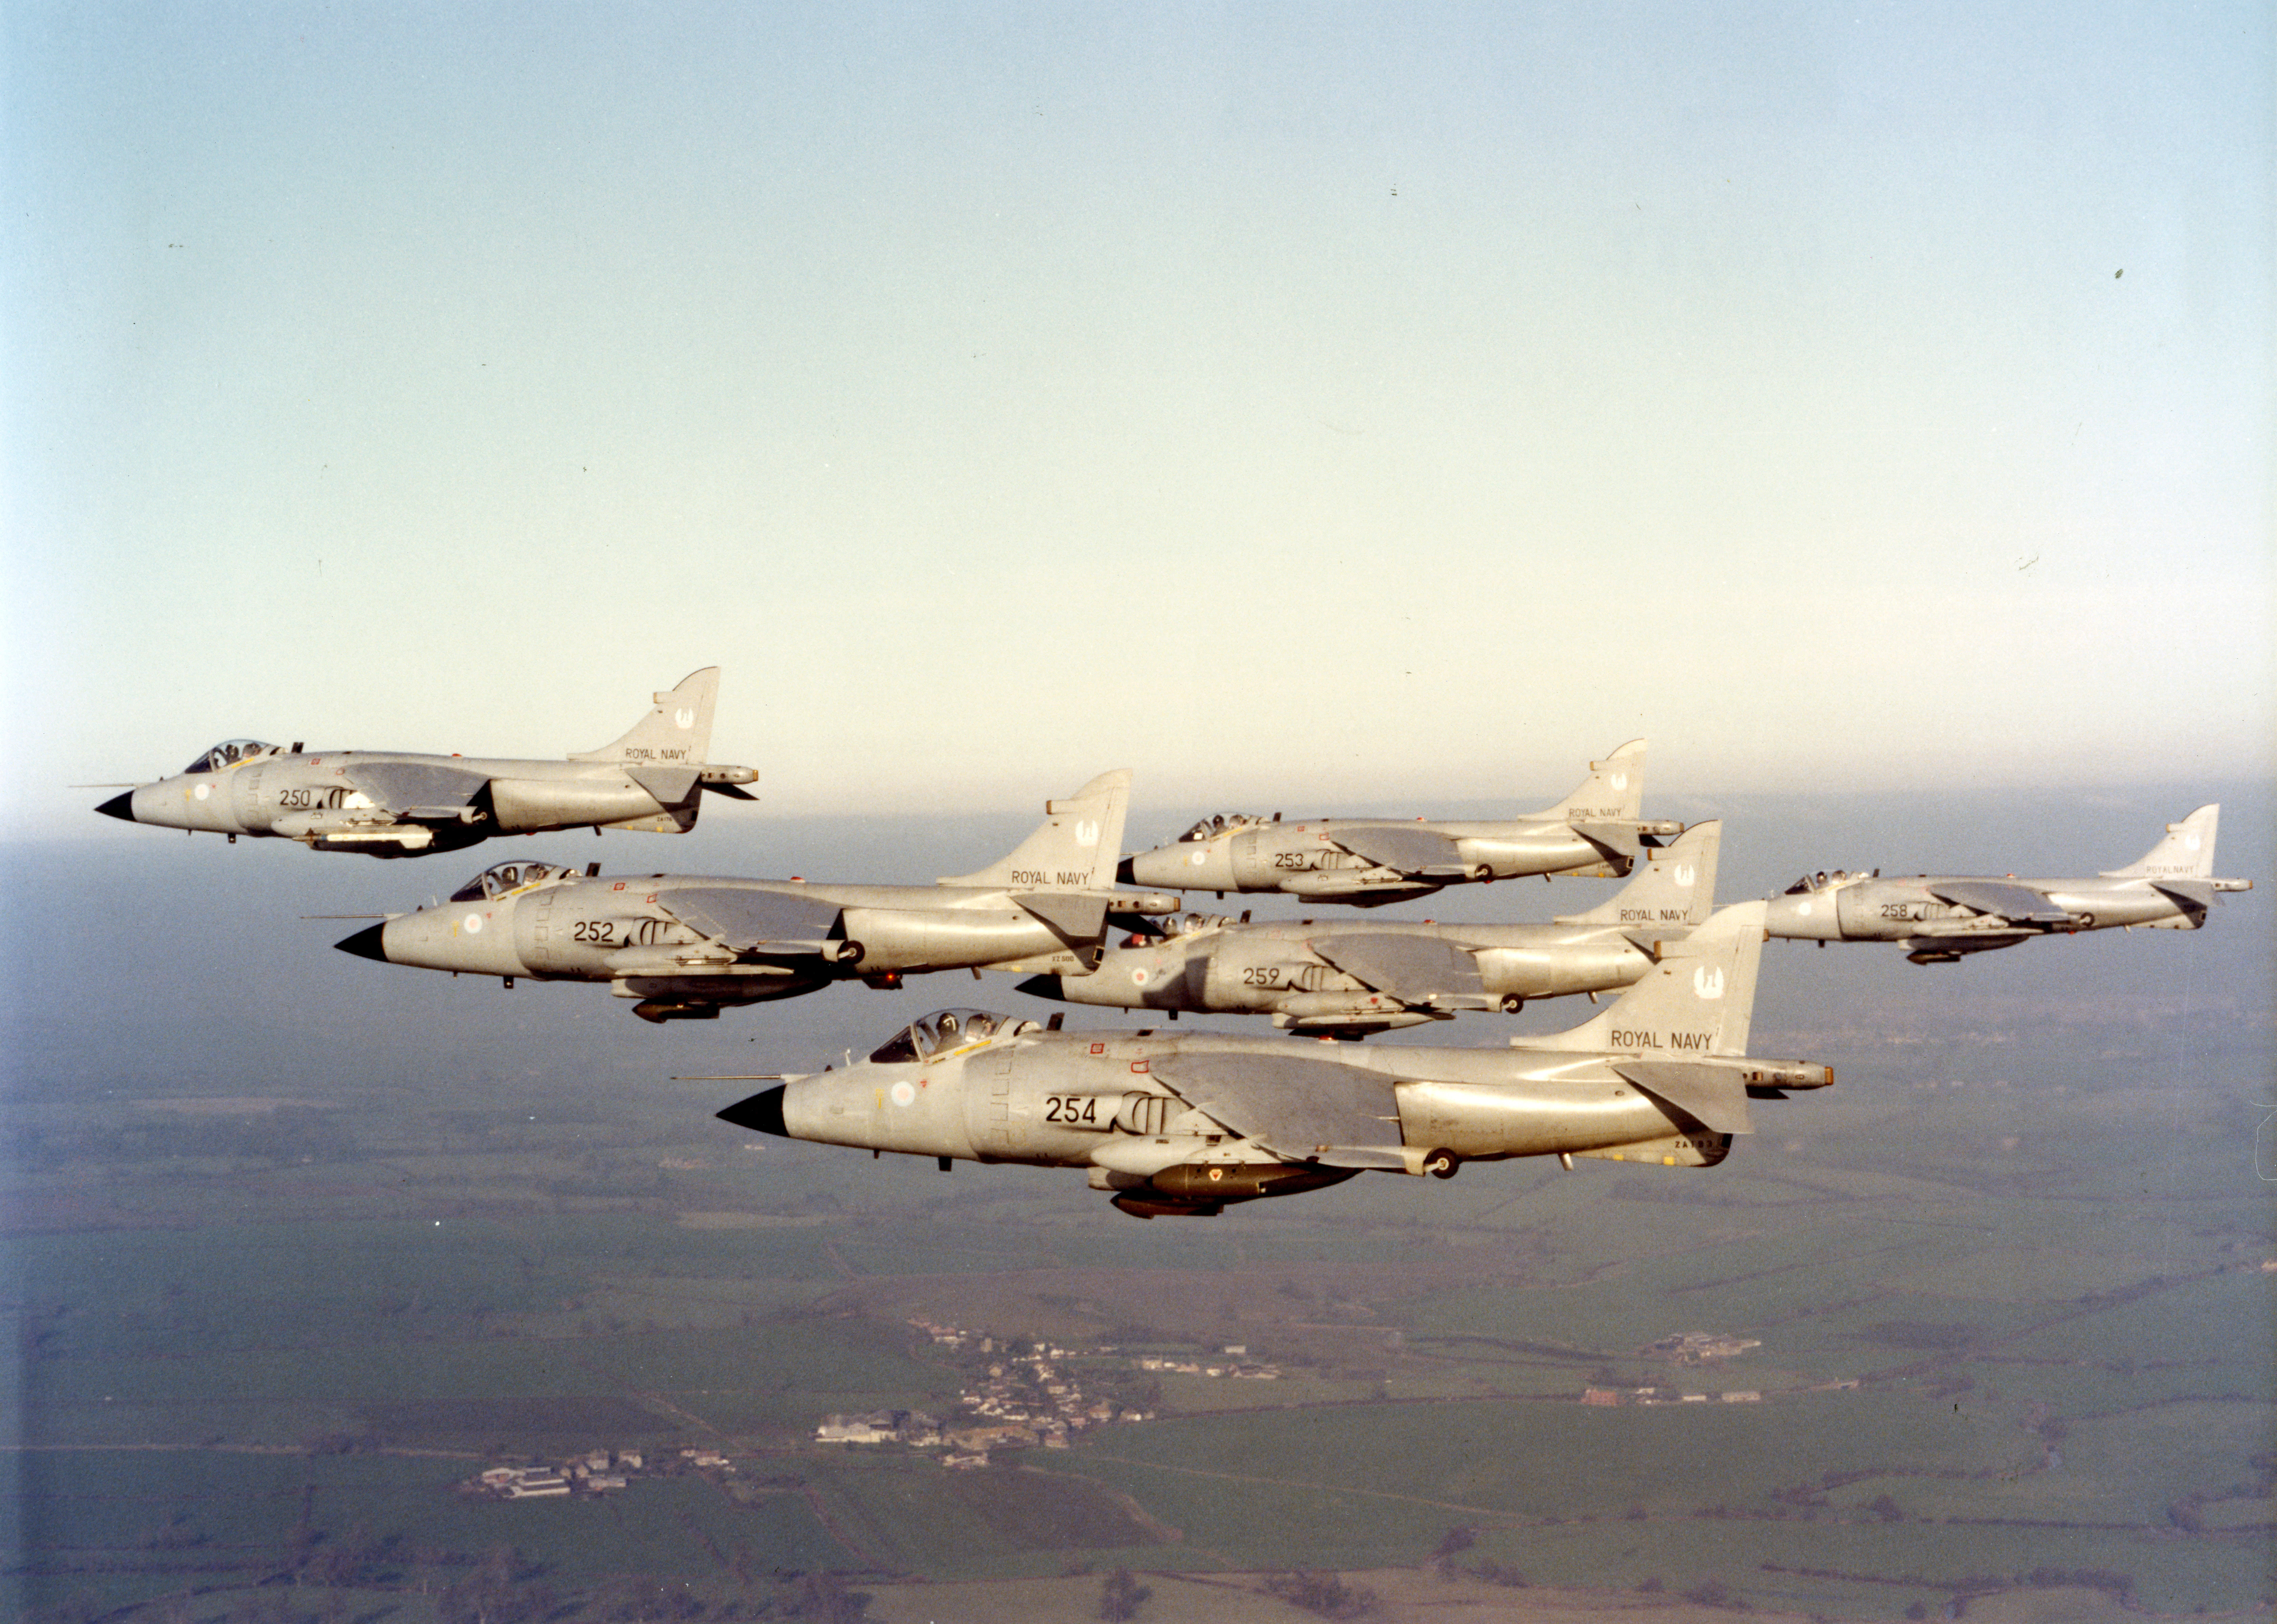 BAE Sea Harrier FRS.1 do 809 NAS. Foto: RN.